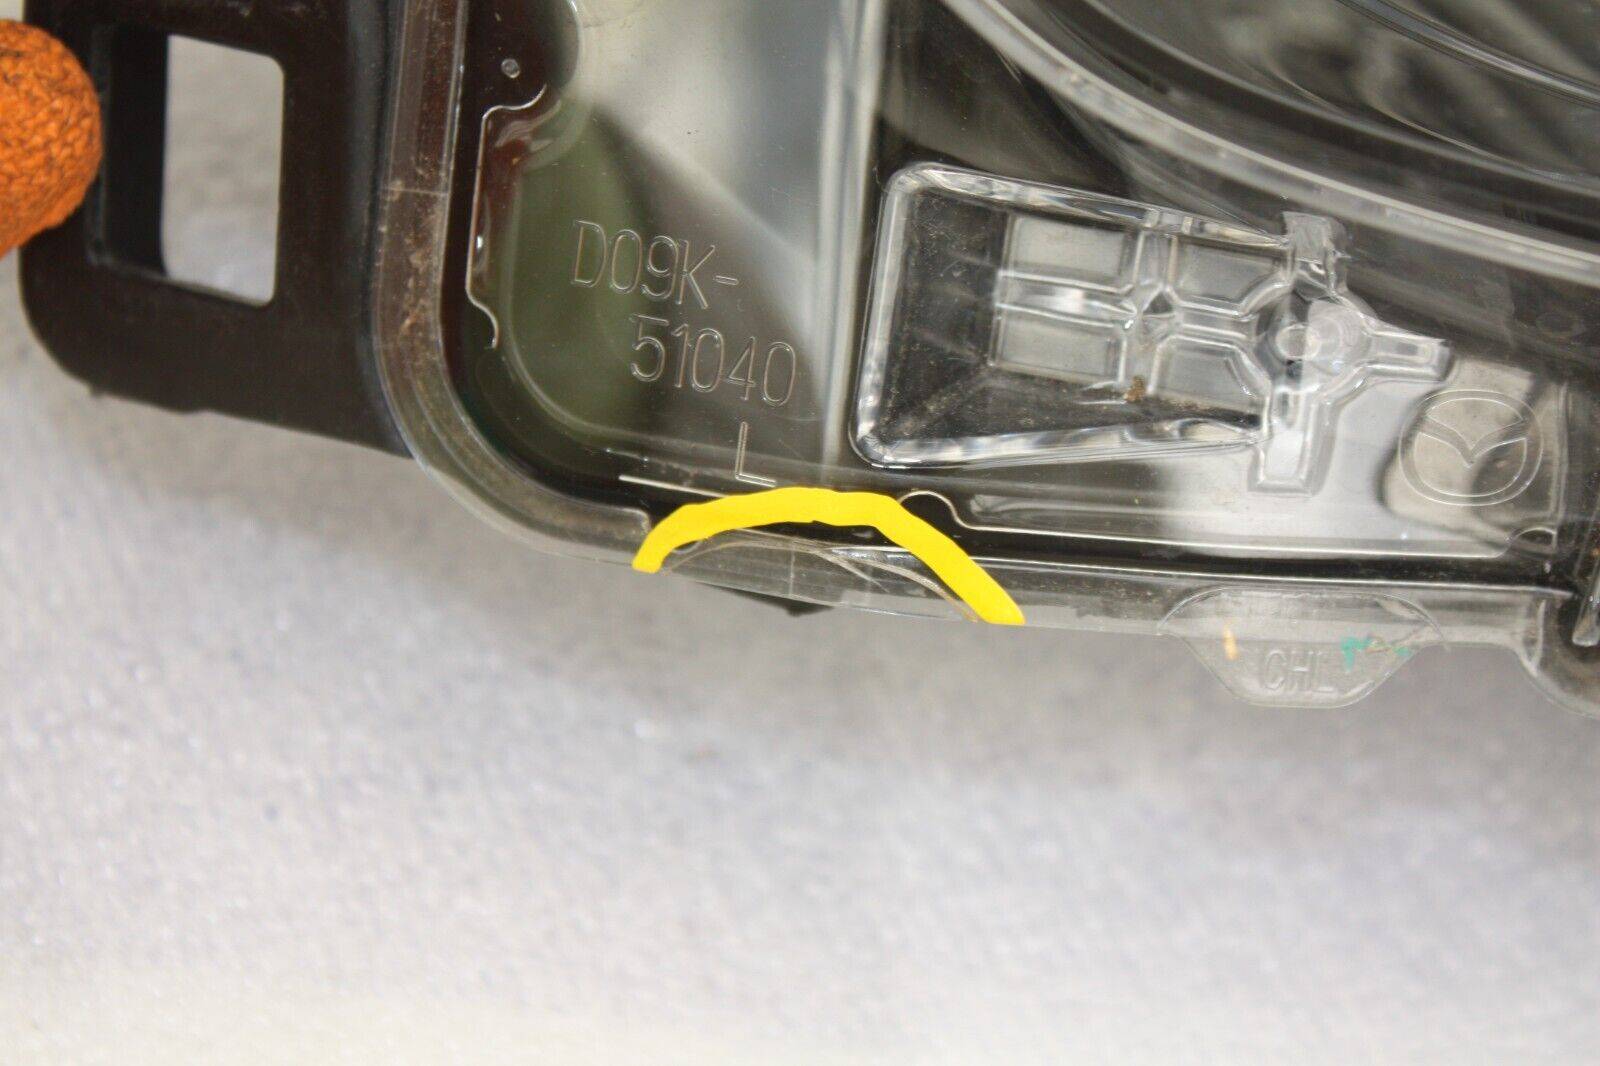 Mazda-2-Left-Side-Headlight-D09K-51040-Genuine-DAMAGED-176440324321-7